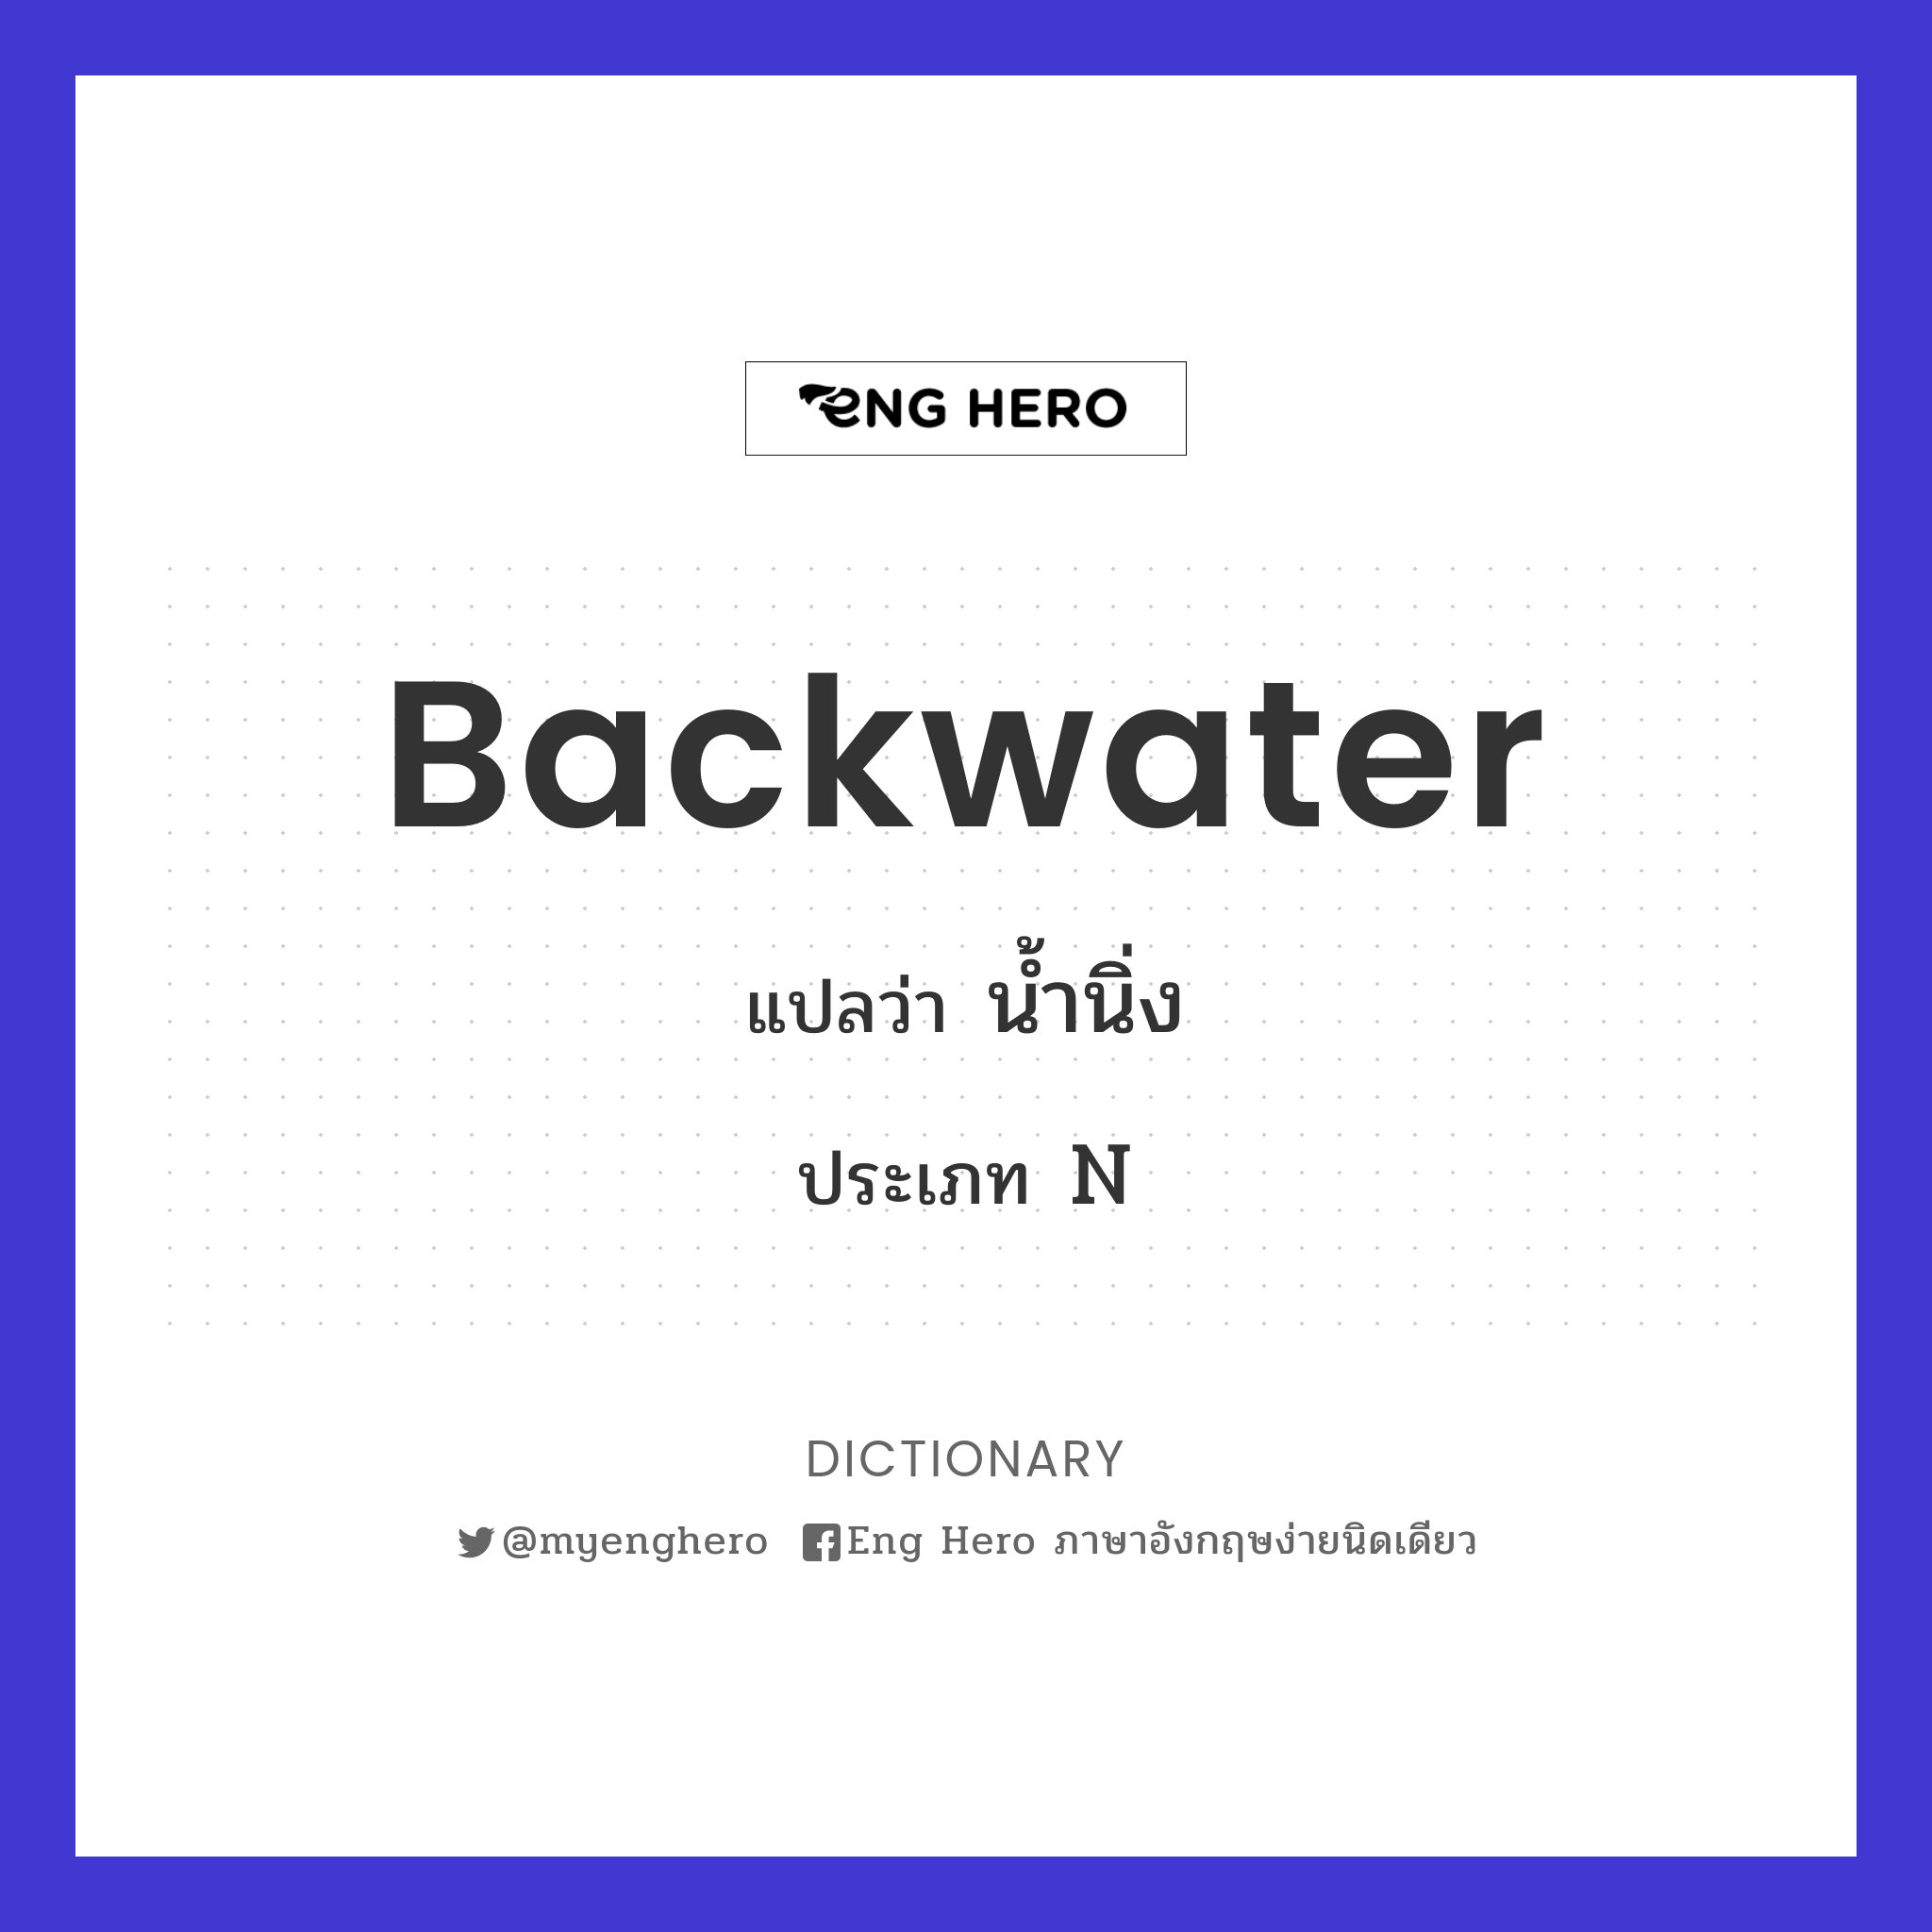 backwater